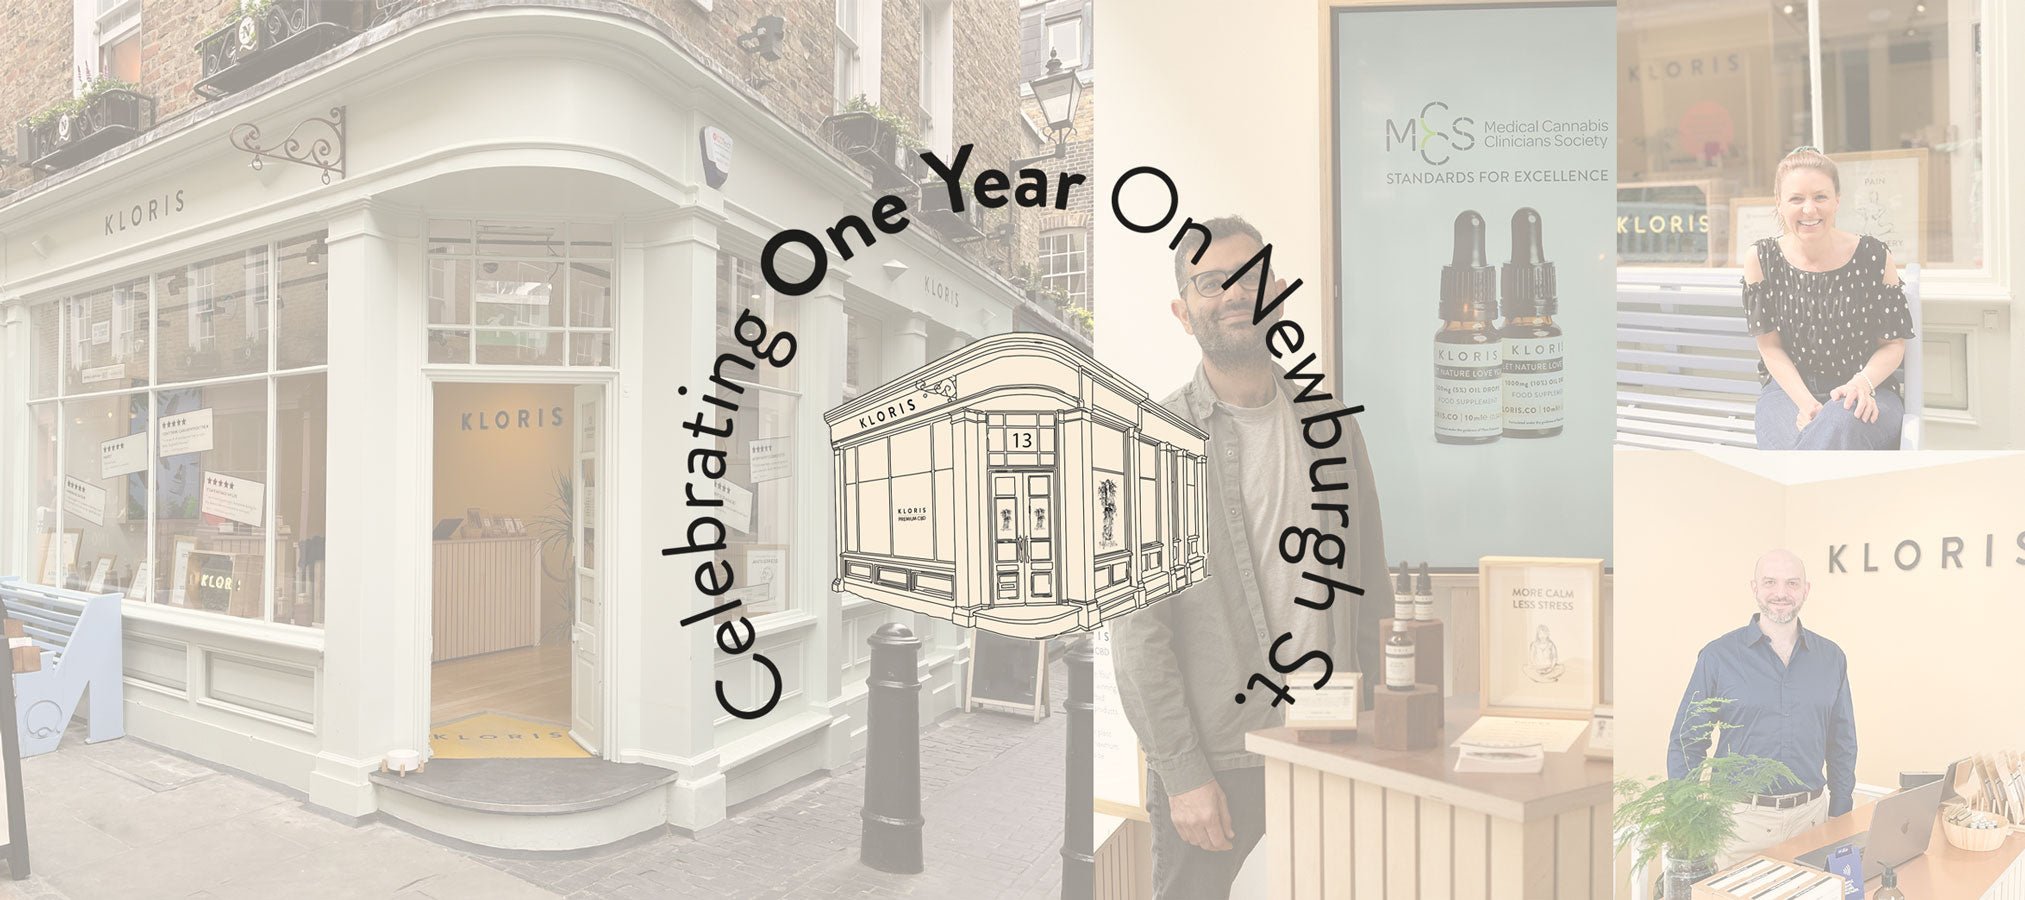 Celebrating One Year On Newburgh Street - KLORIS